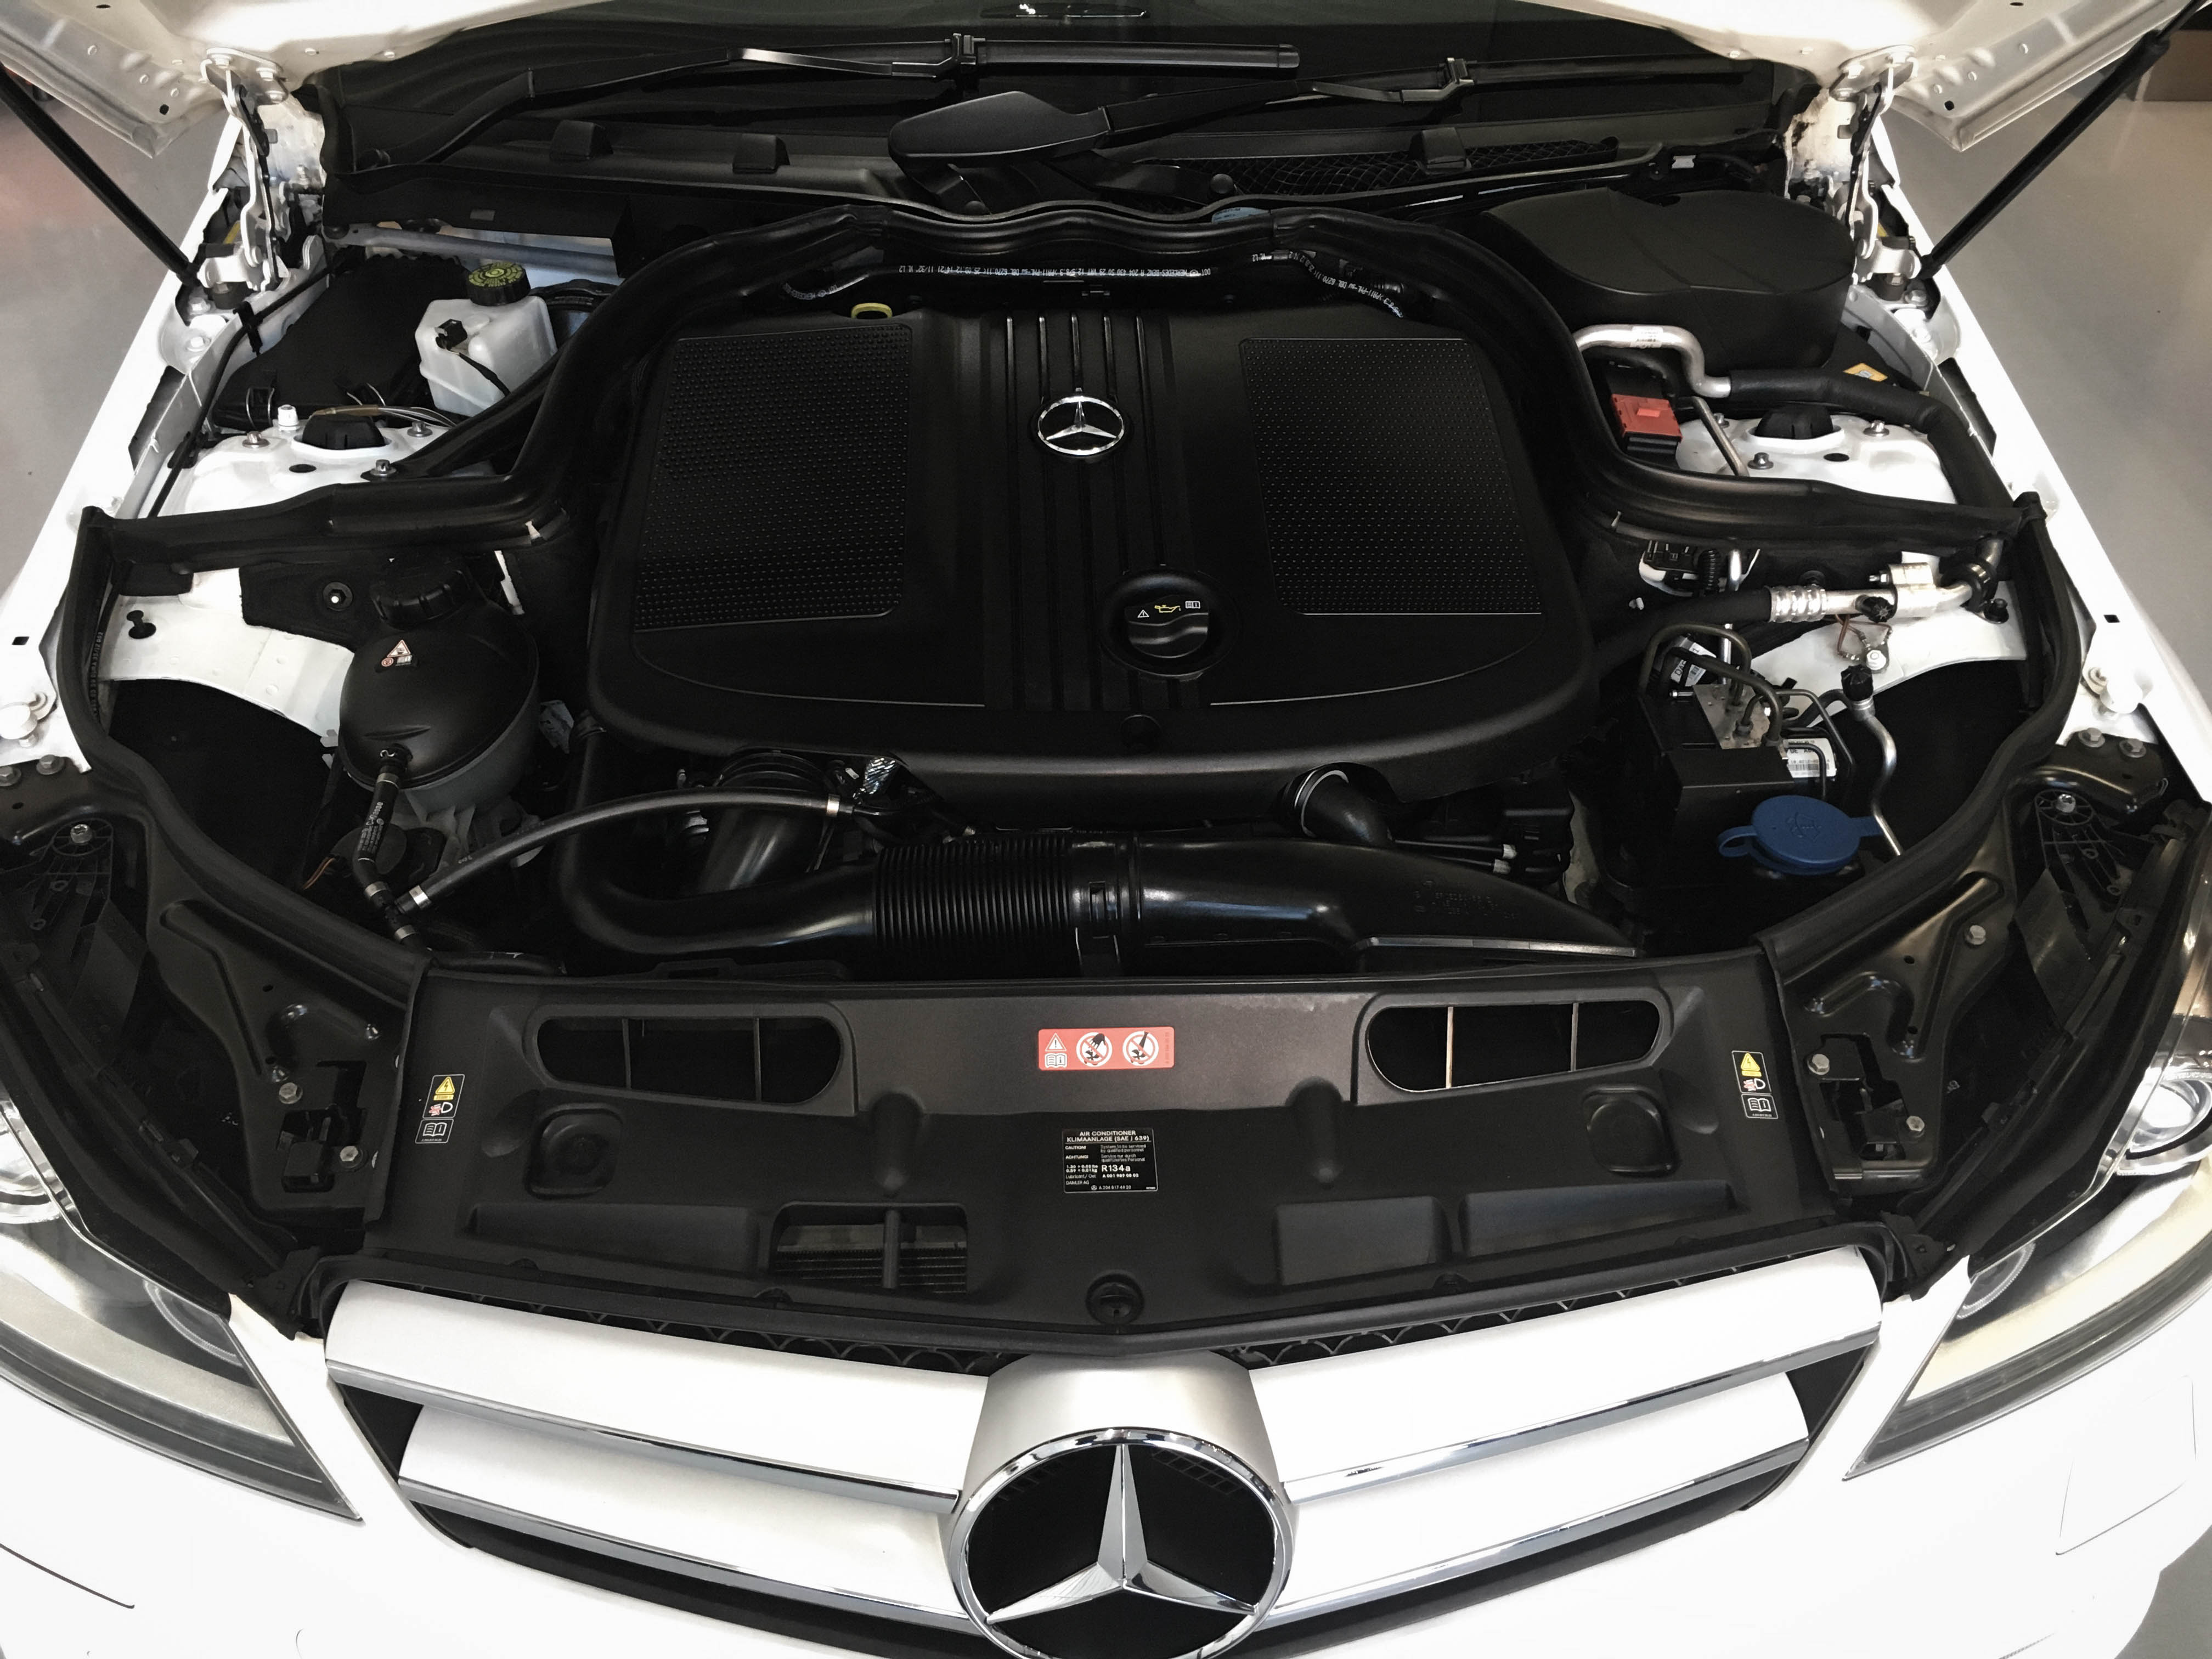 Mercedes C Class – Engine